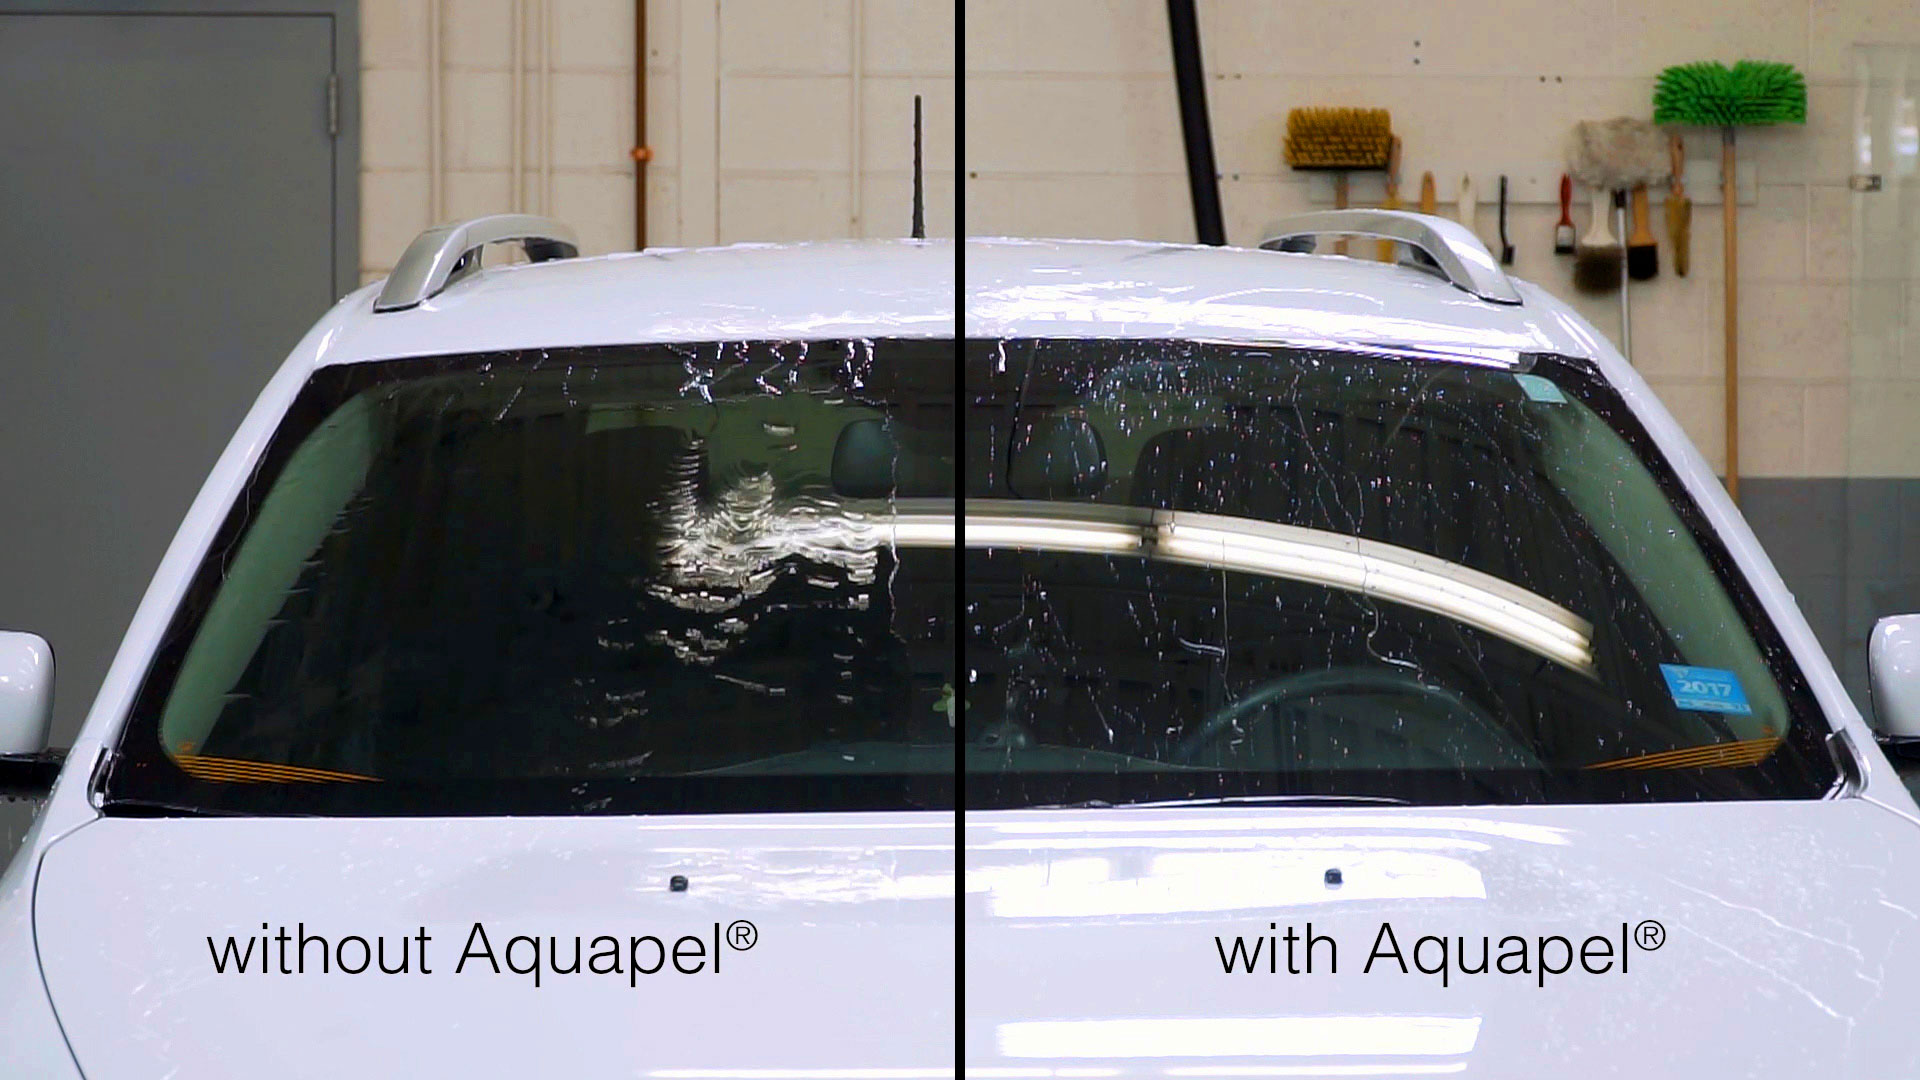 Buy Aquapel Glass Treatment Windsield Rain